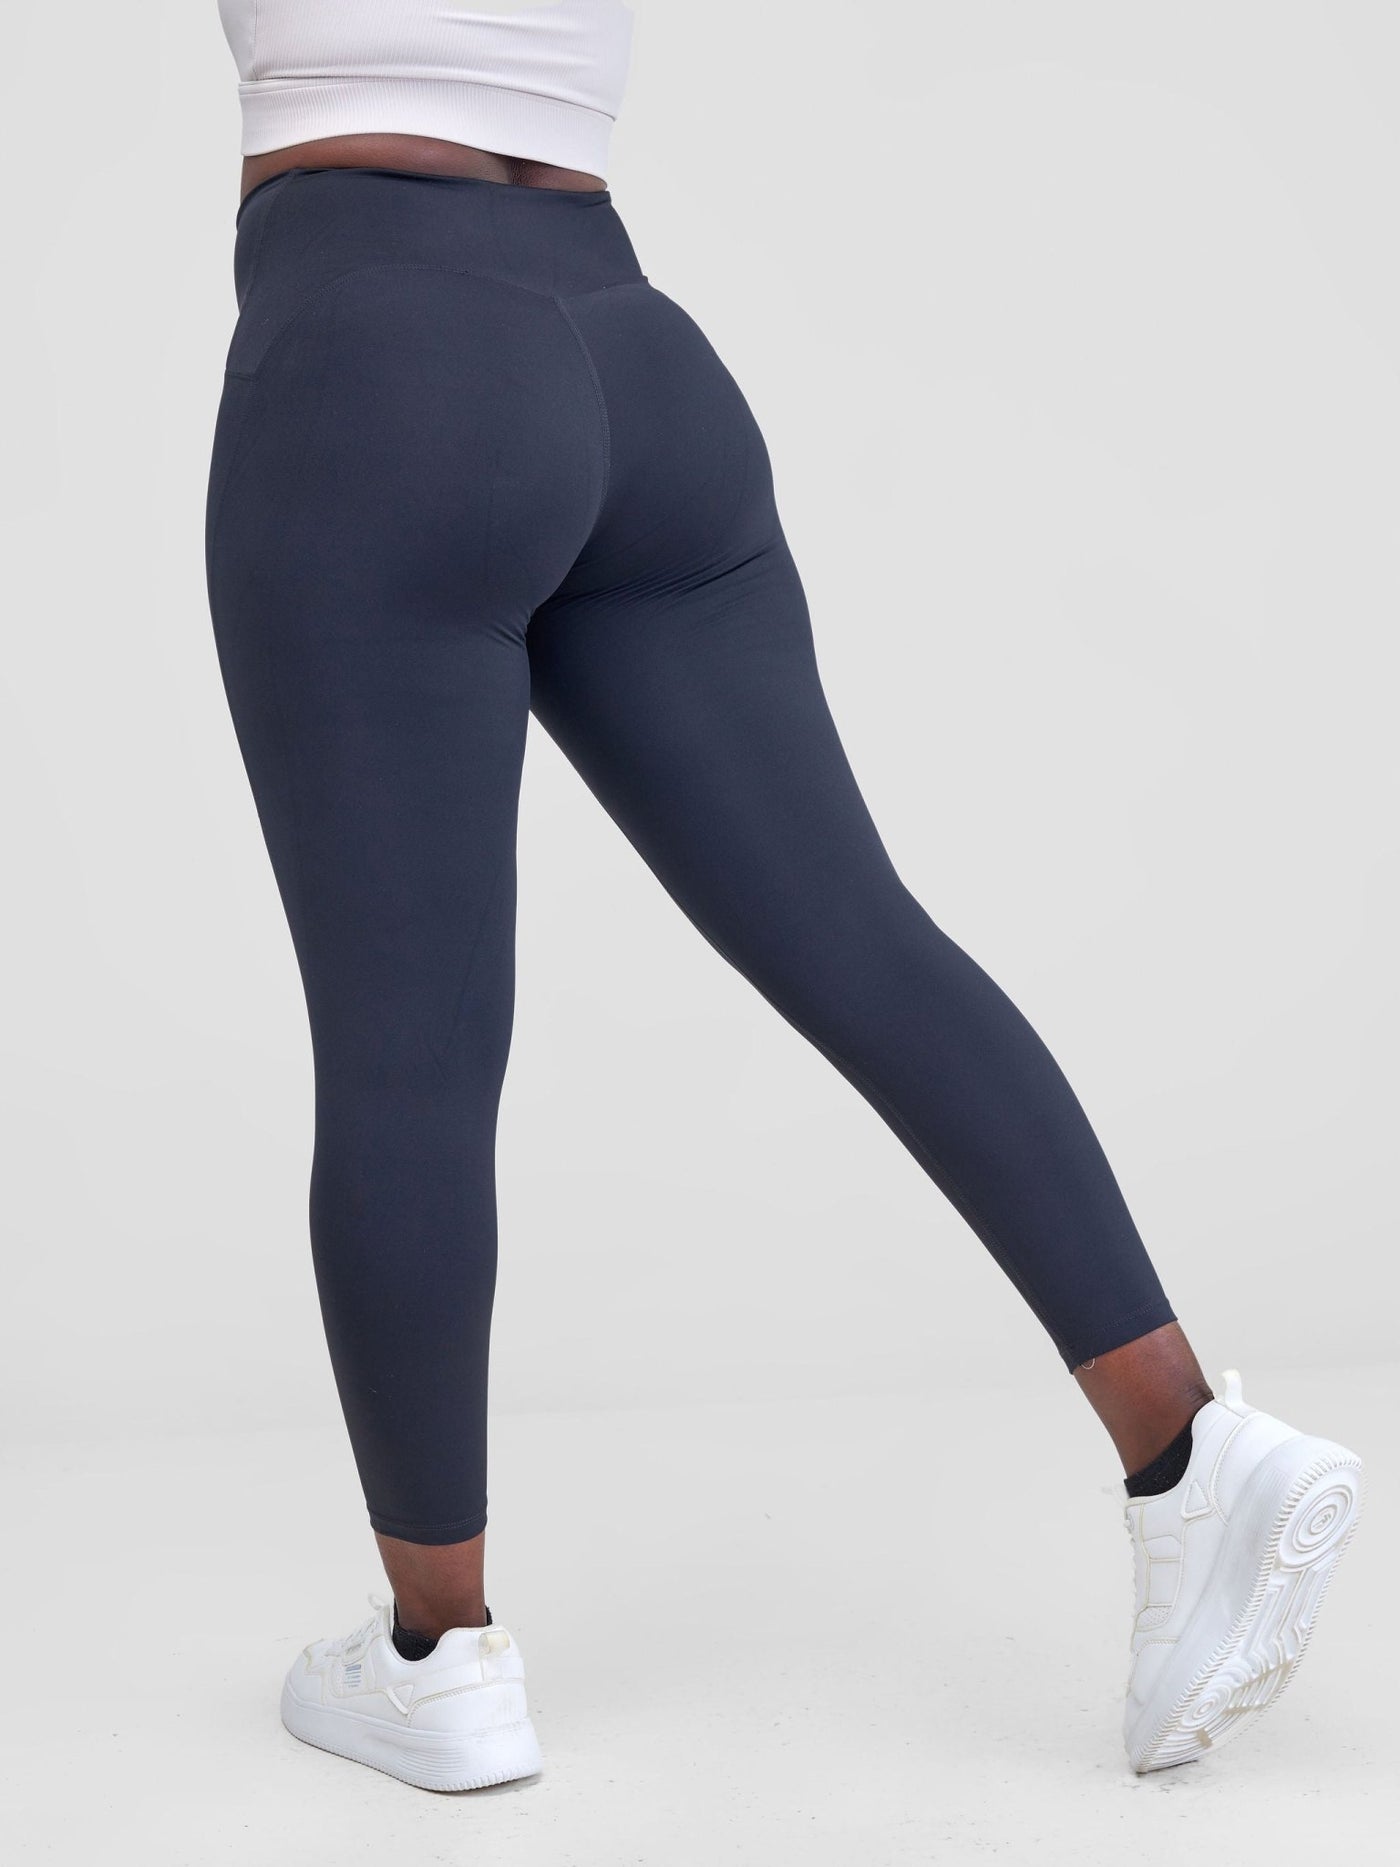 Ava Fitness Lilly High Waisted Leggings - Black - Shopzetu